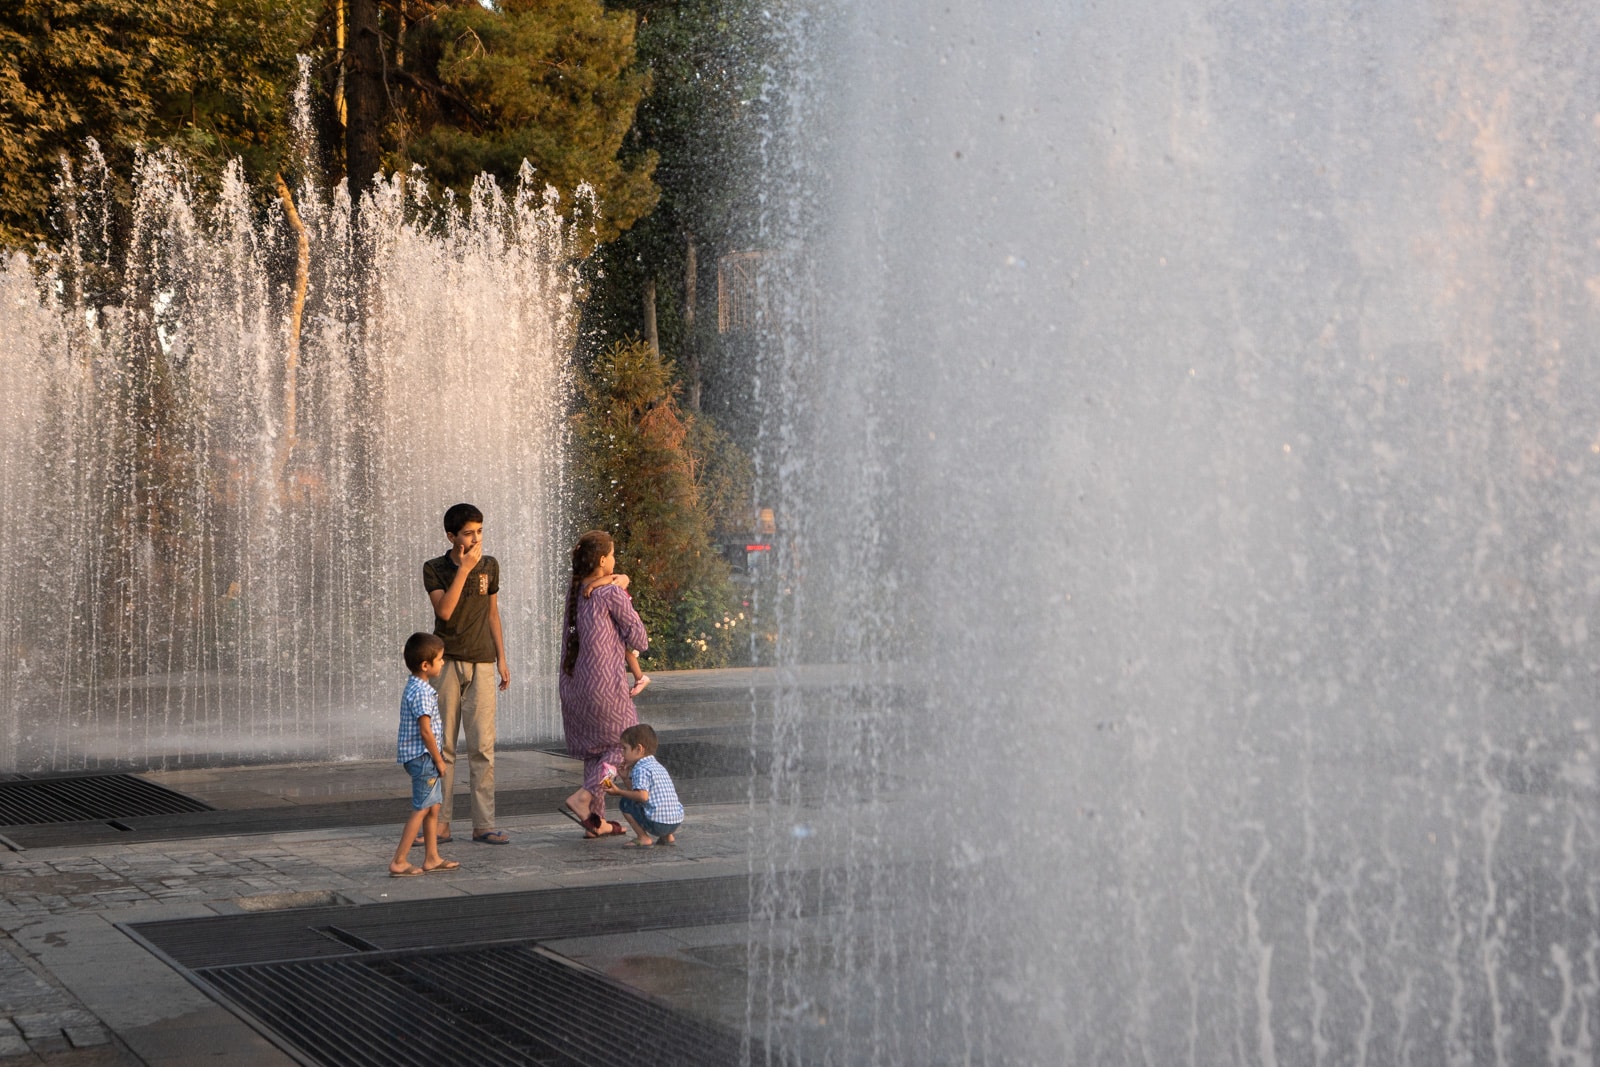 Locals walking in fountains in Dushanbe, Tajikistan